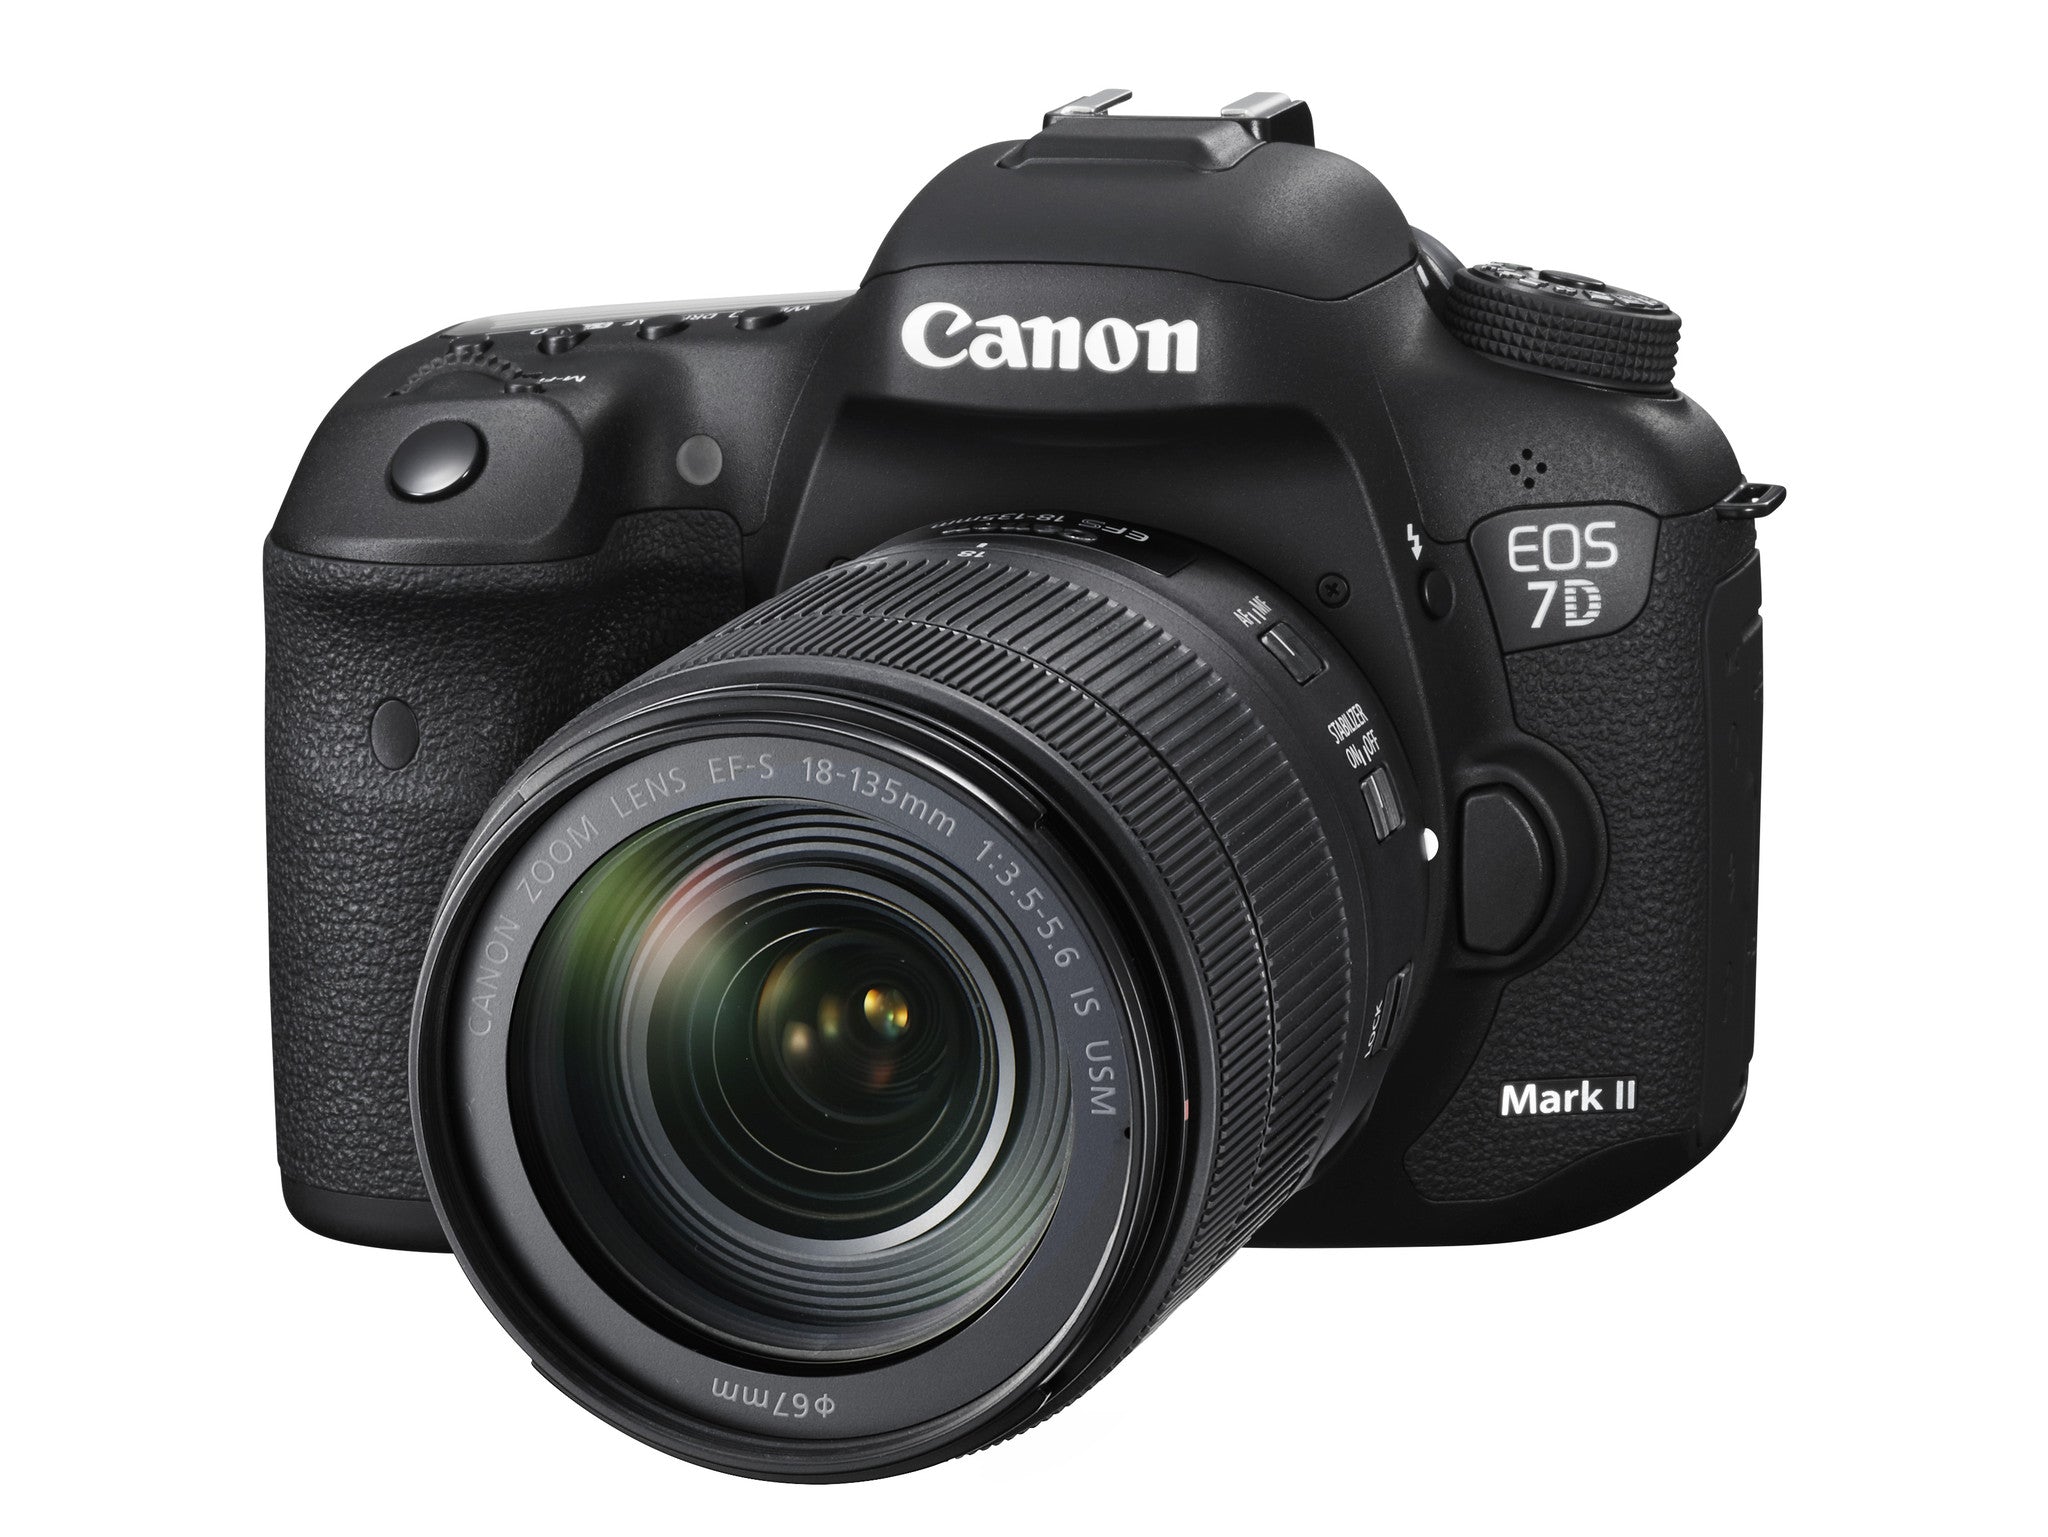 Canon EOS 7D Mark II EF-S 18-135mm f/3.5-5.6 IS USM Digital SLR Camera Wi-Fi Adapter Kit, camera dslr cameras, Canon - Pictureline  - 1